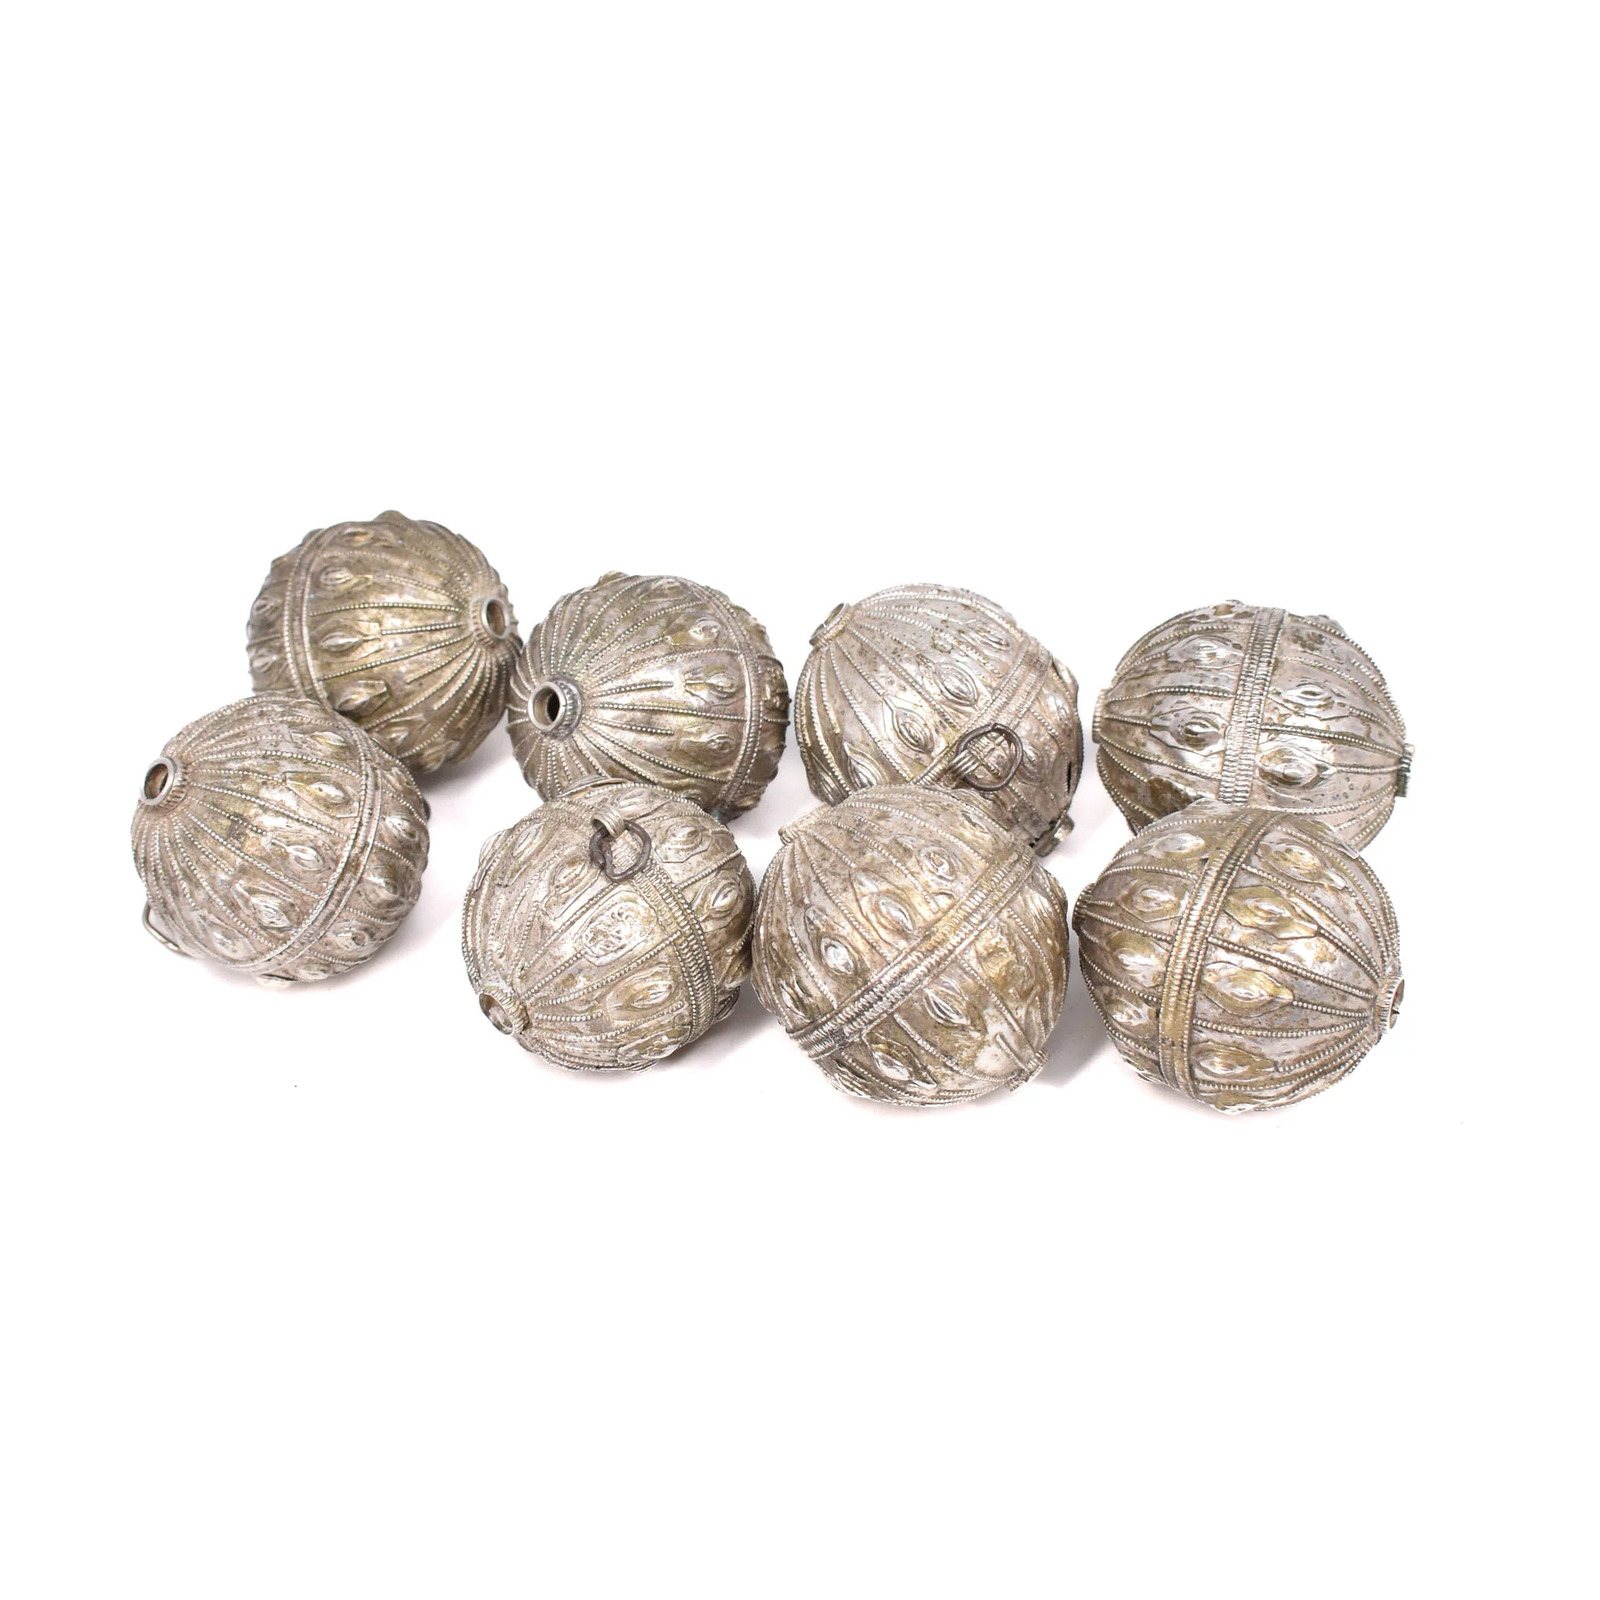 8 Loose Yemeni Hollow Metal Beads Ruth Flynn Collection